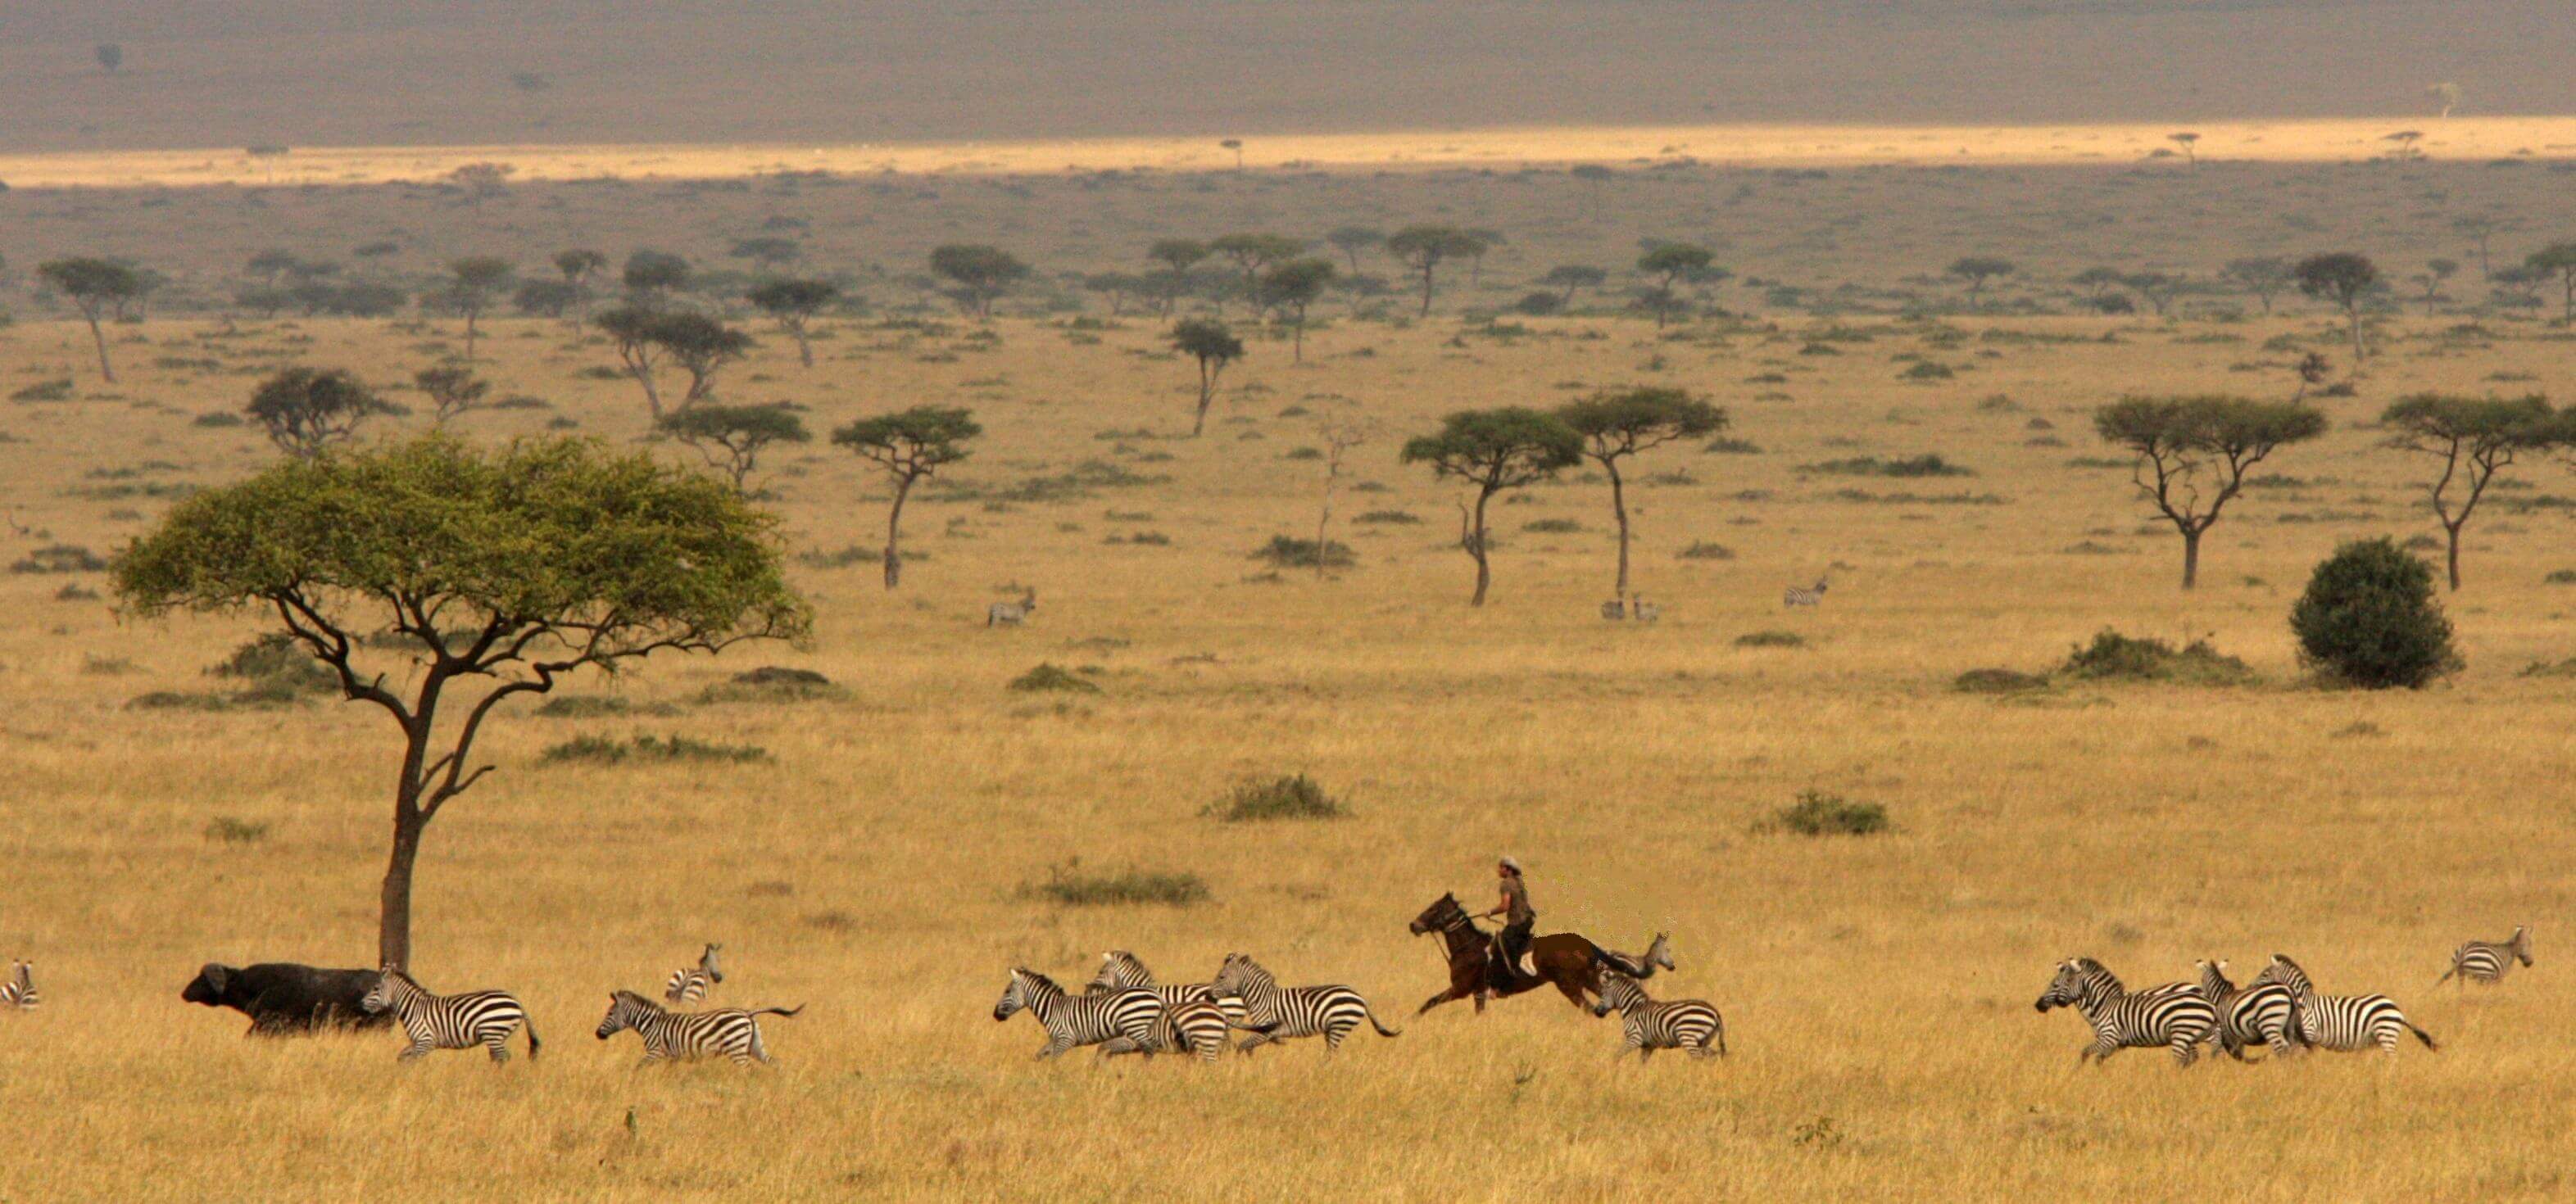 Horseback safaris in the Masai Mara with Offbeat Safaris